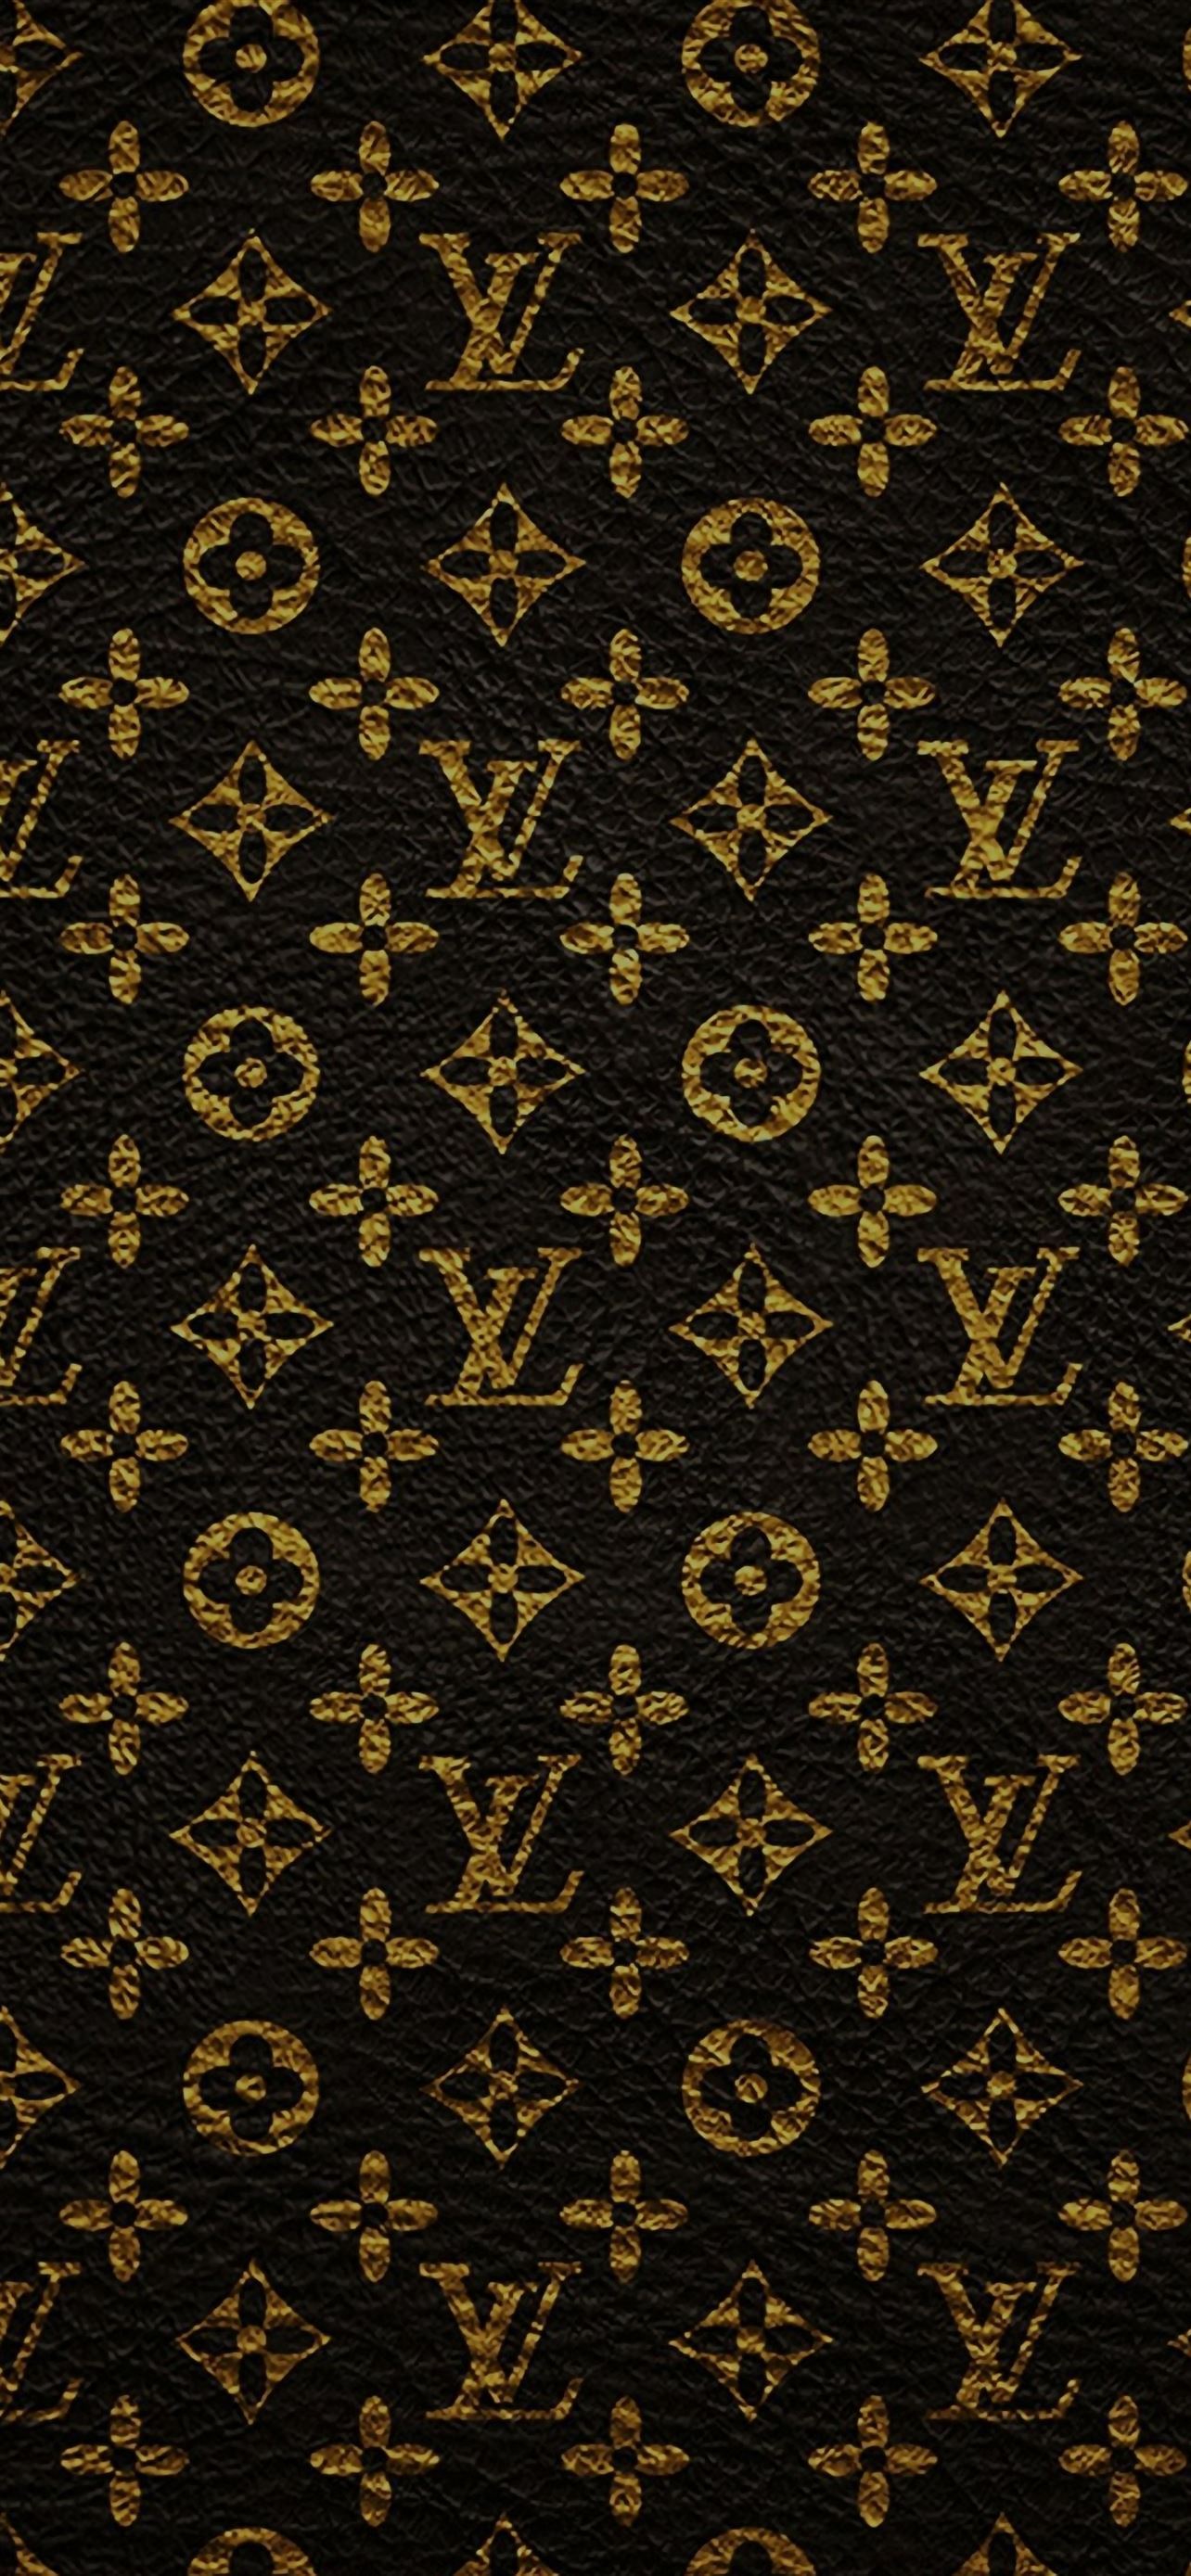 Louis Vuitton Dark Pattern Art iPhone se Wallpaper Download | iPhone Wallpapers, iPad wallpapers ...